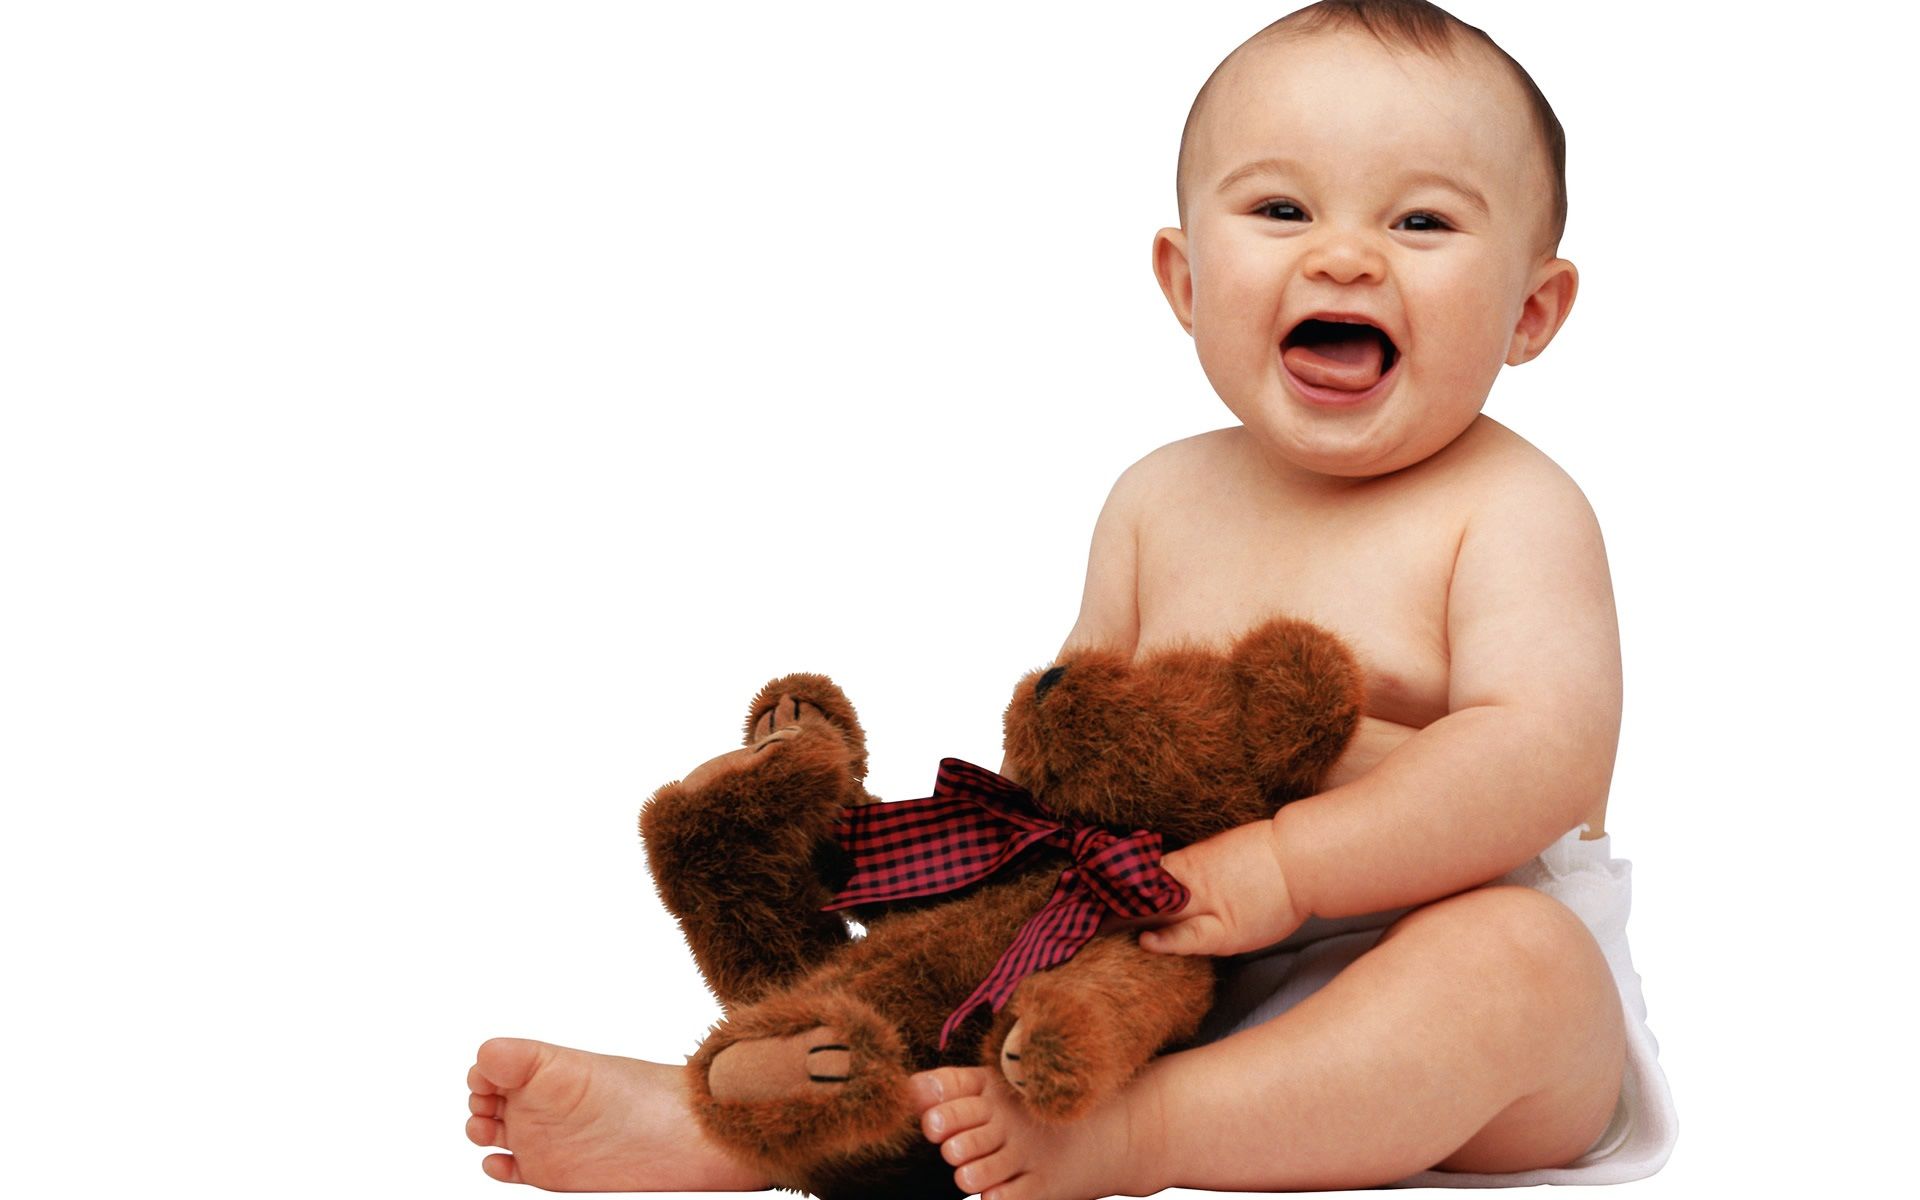 Cute Baby Wallpaper Desktop Attachment 6828 - HD Wallpapers Site